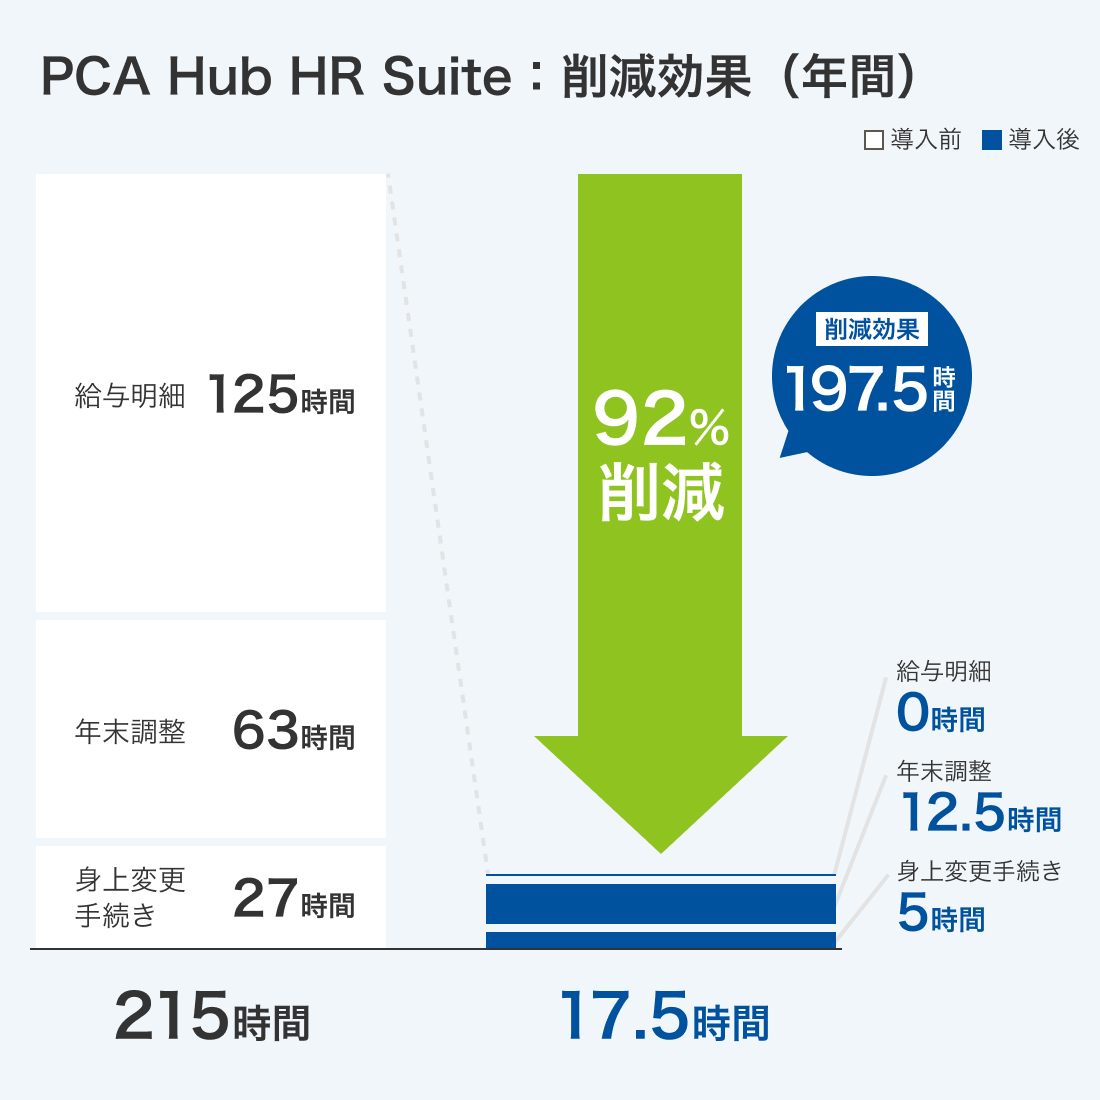 PCA Hub HR Suite：削減効果（年間）イメージ